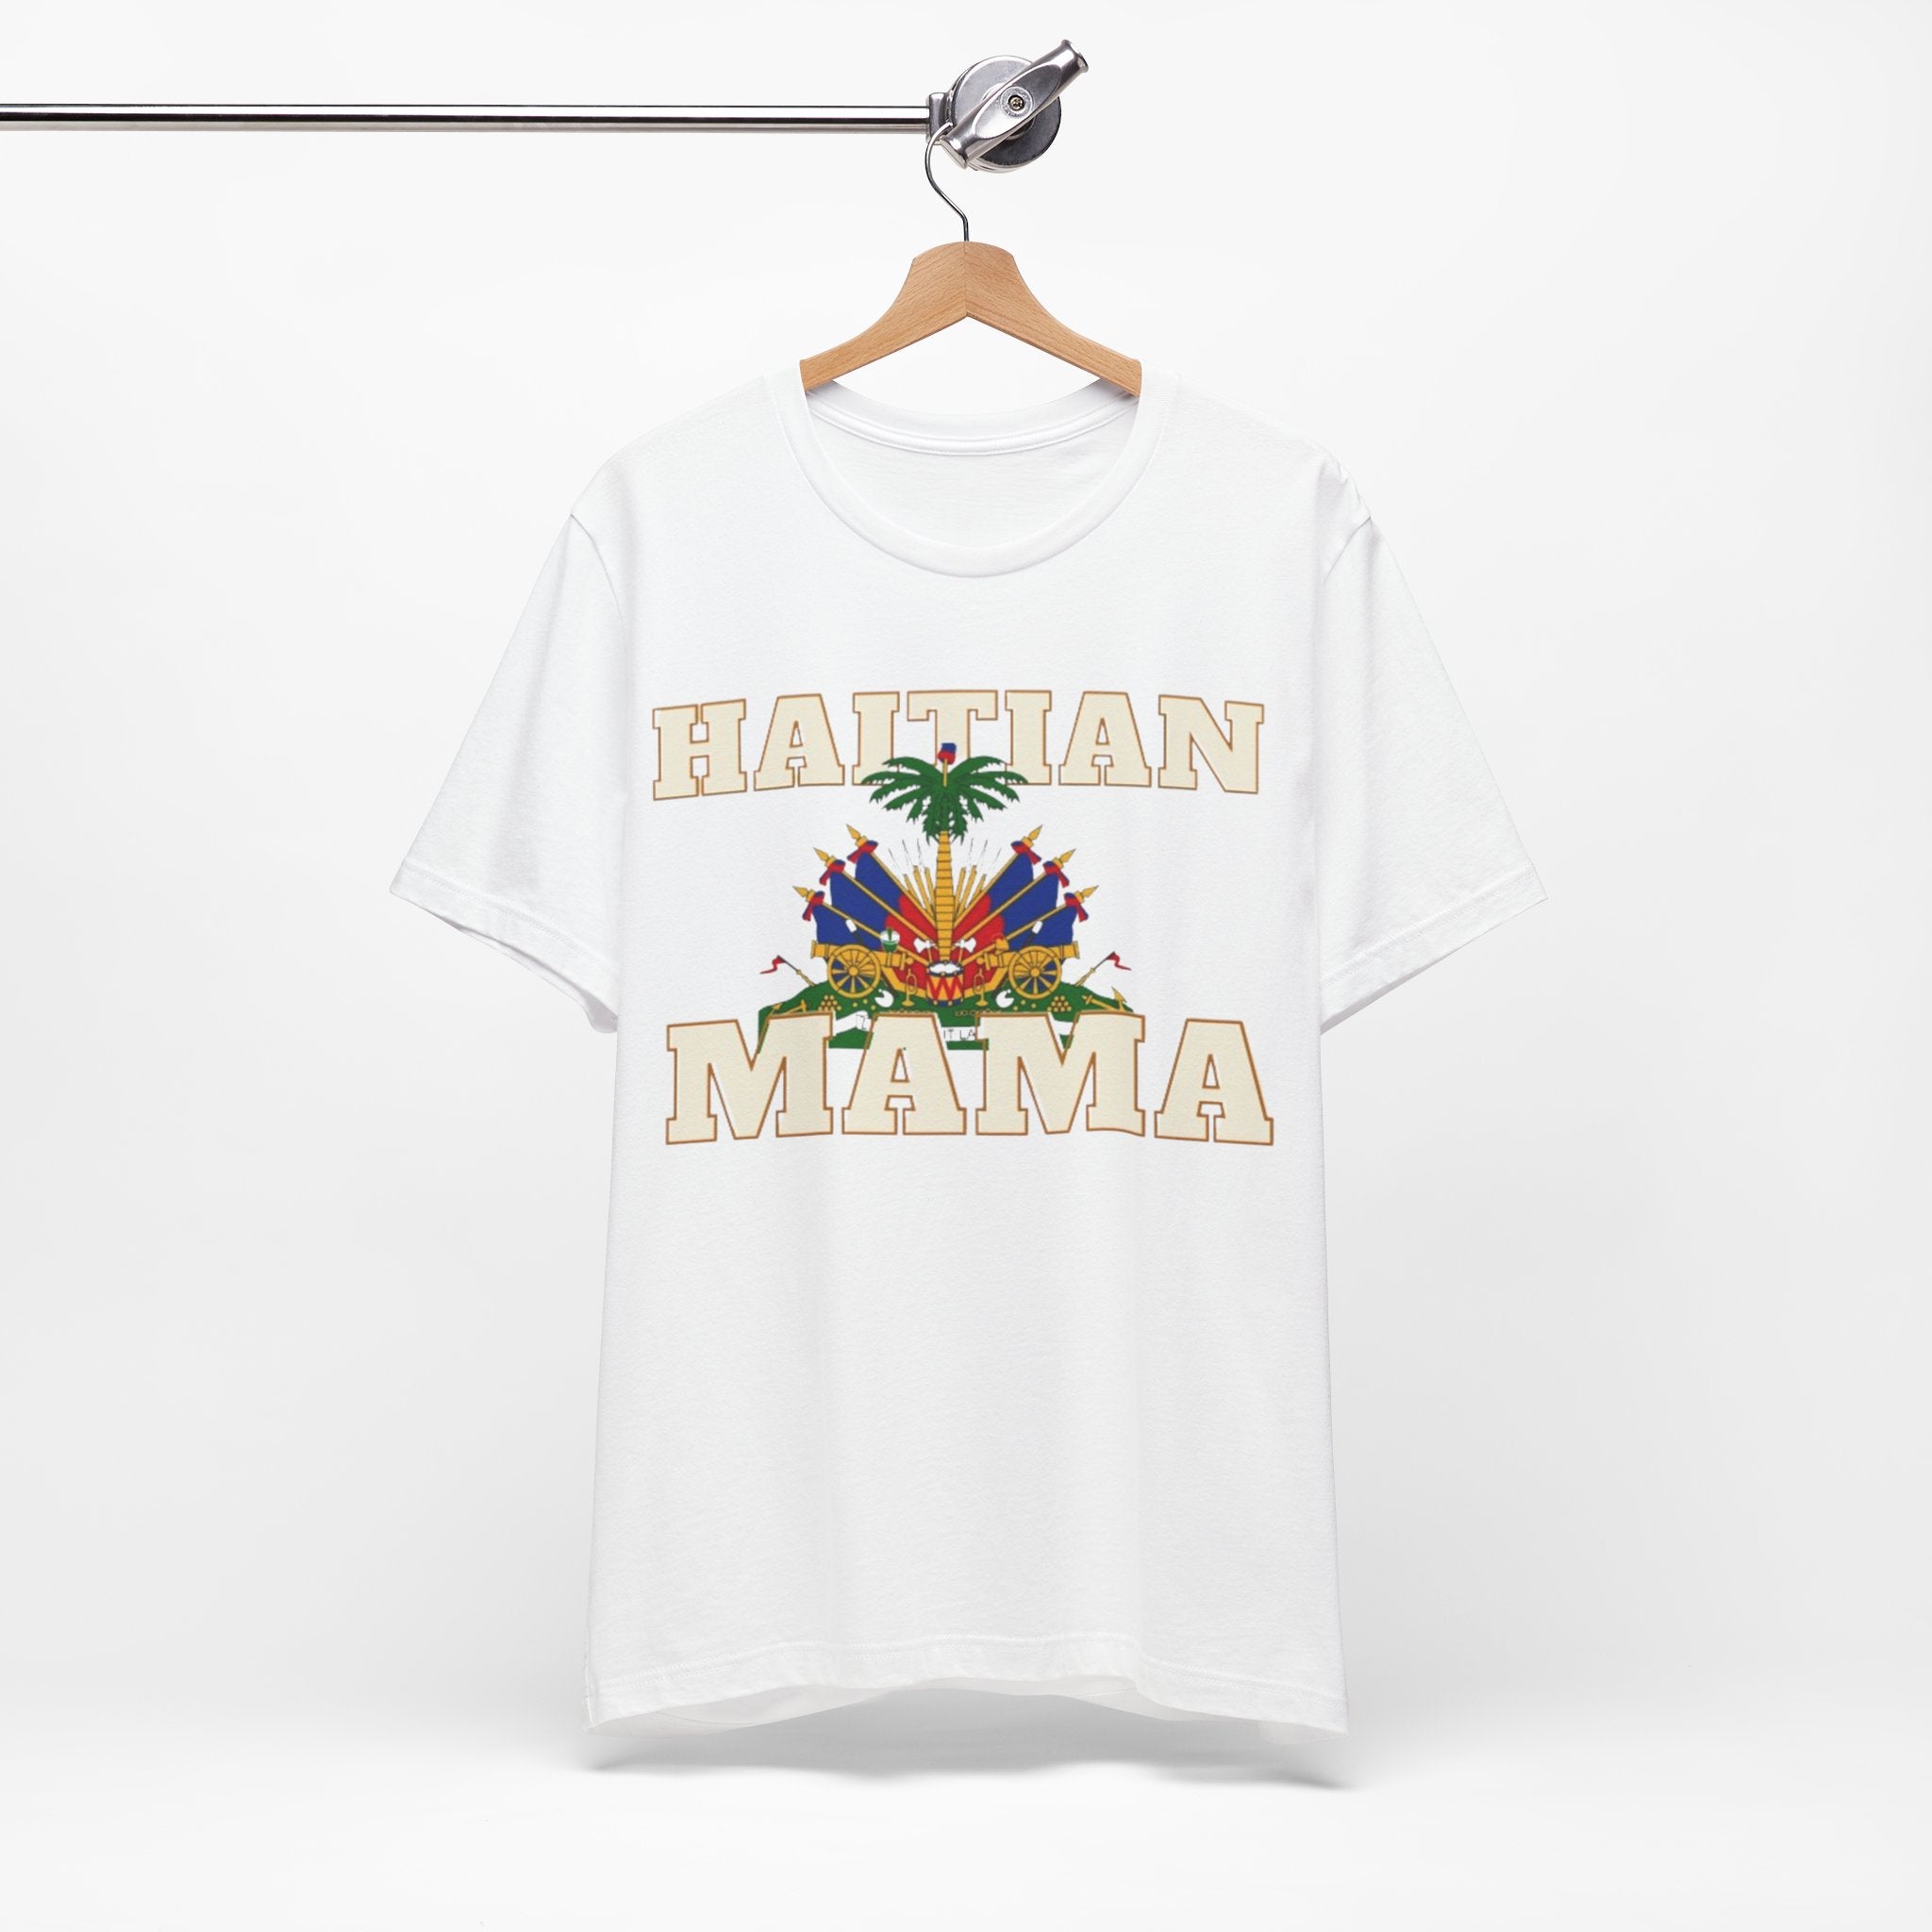 Haitian Mama Tshirt